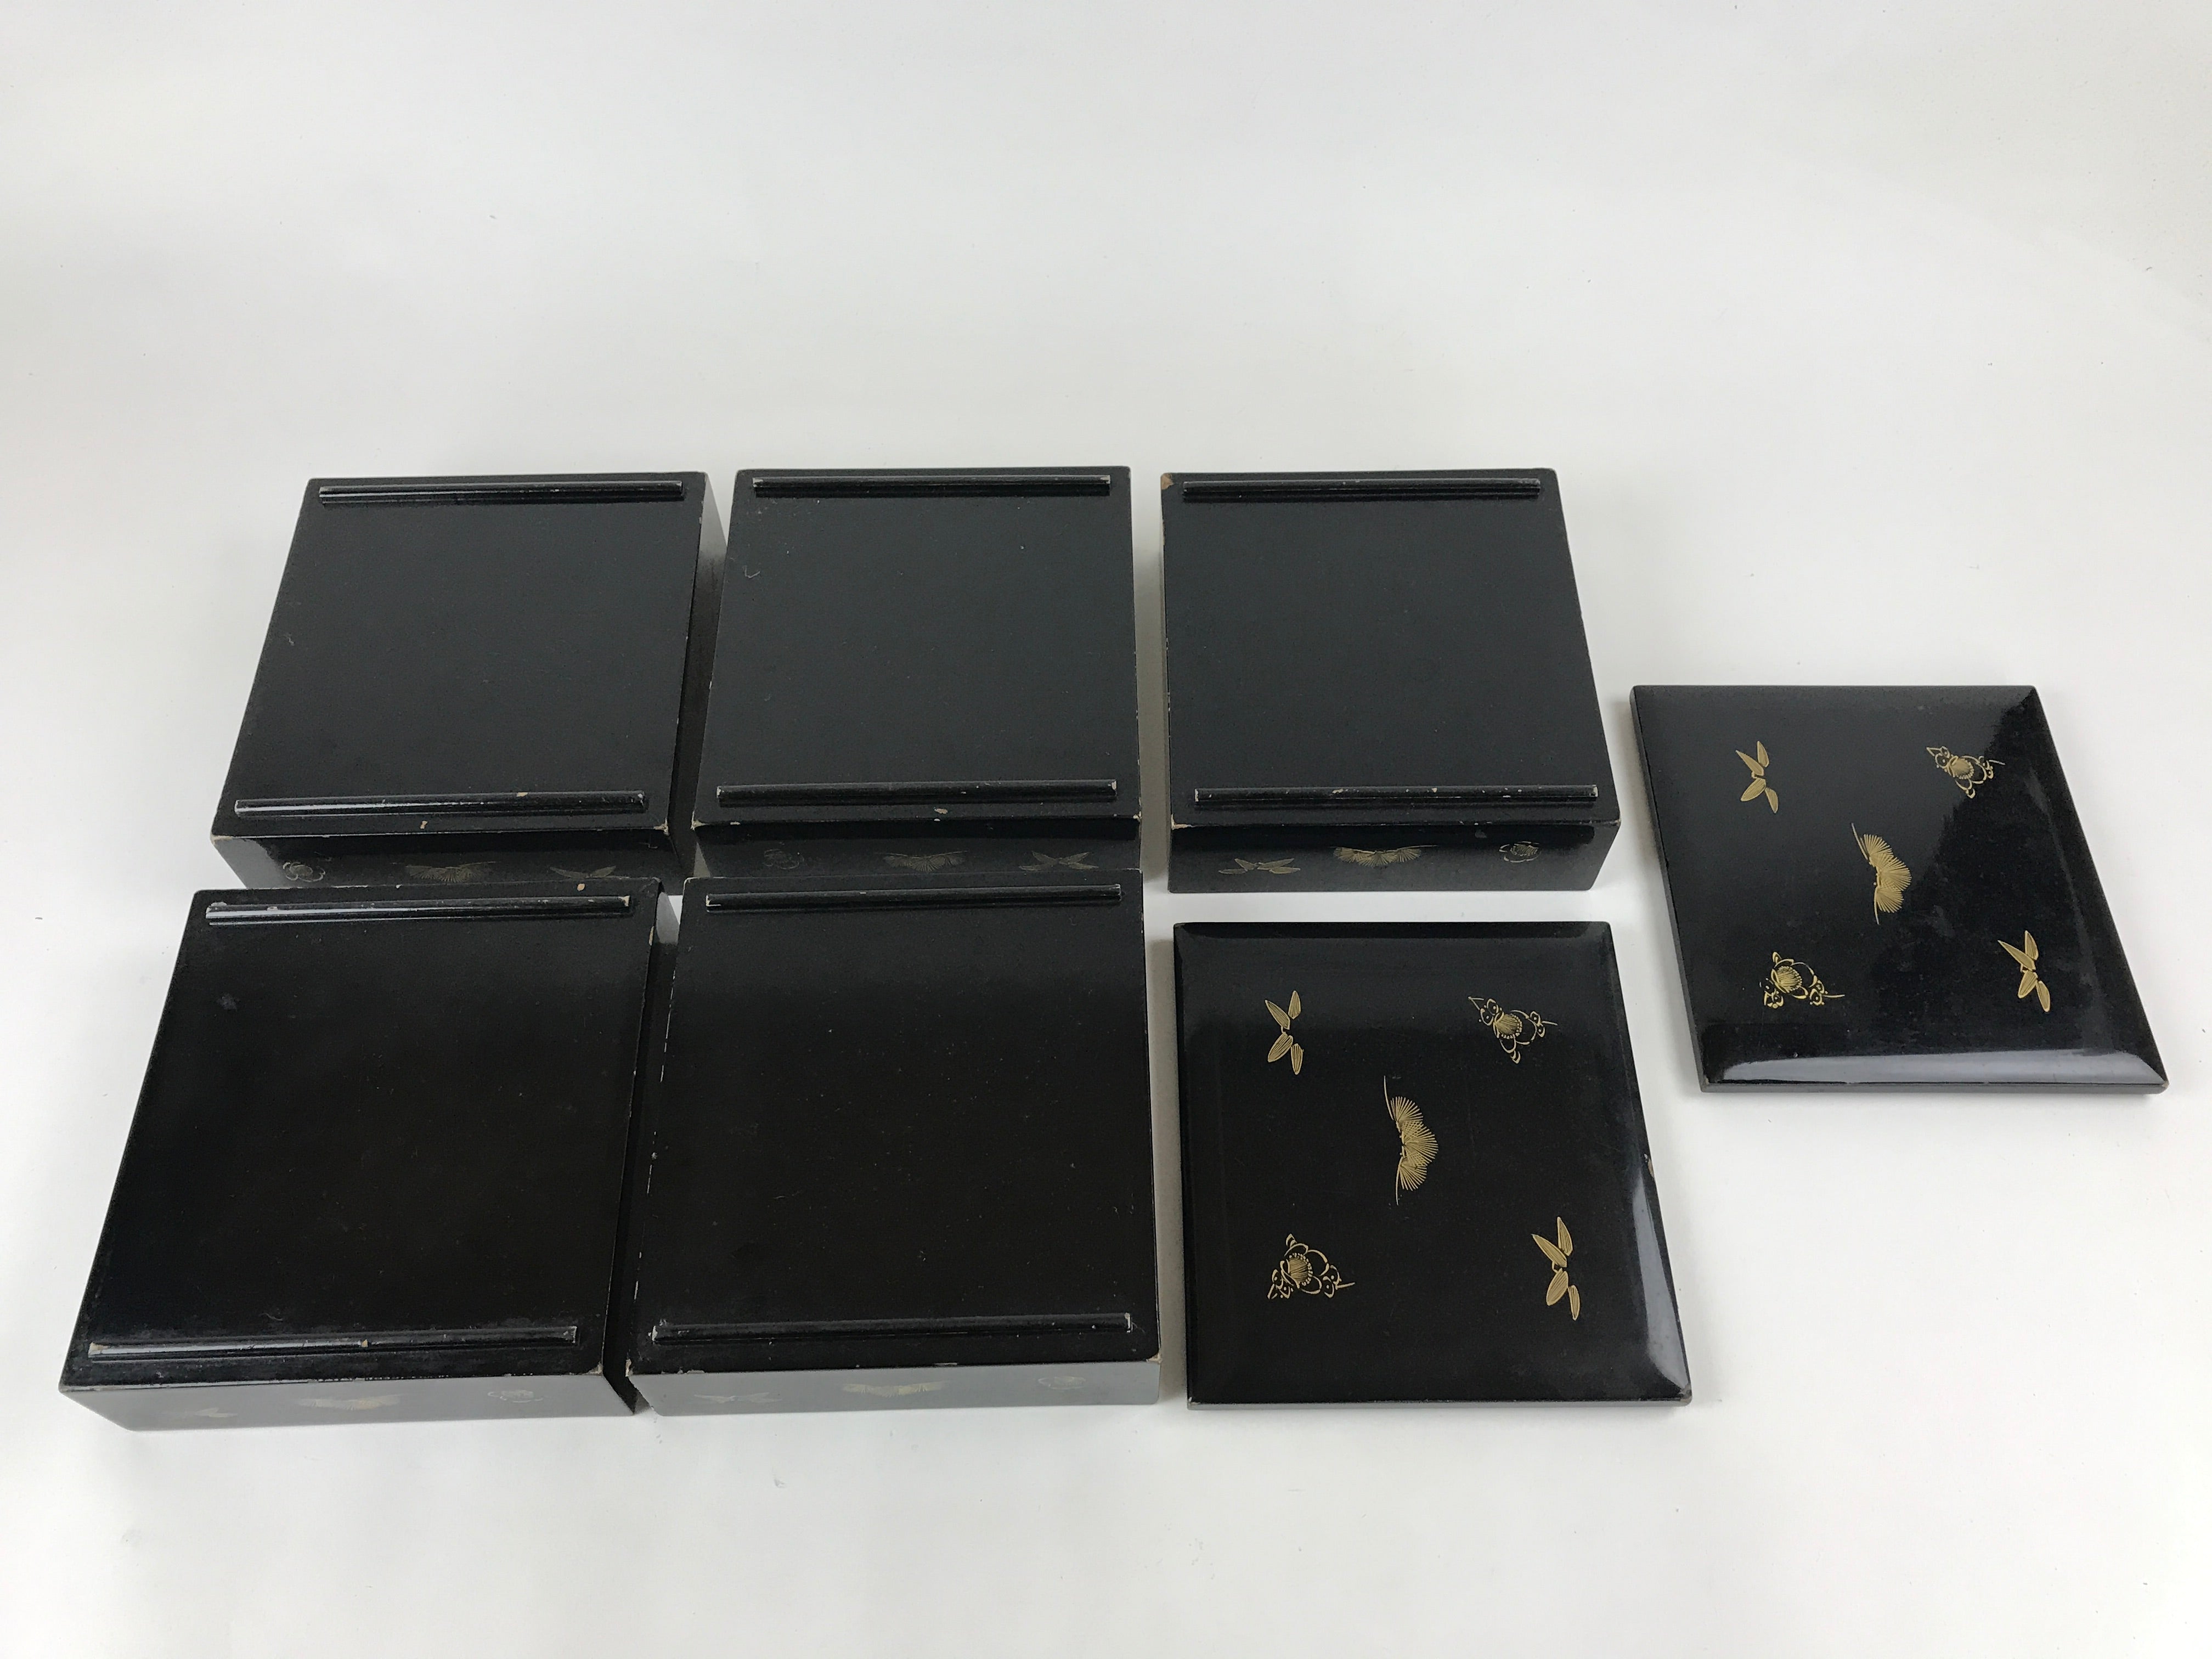 Japanese Lacquerware Bento Boxes 5 Tiers 2 Lids Vtg Wood Storage Box Makie LWB61